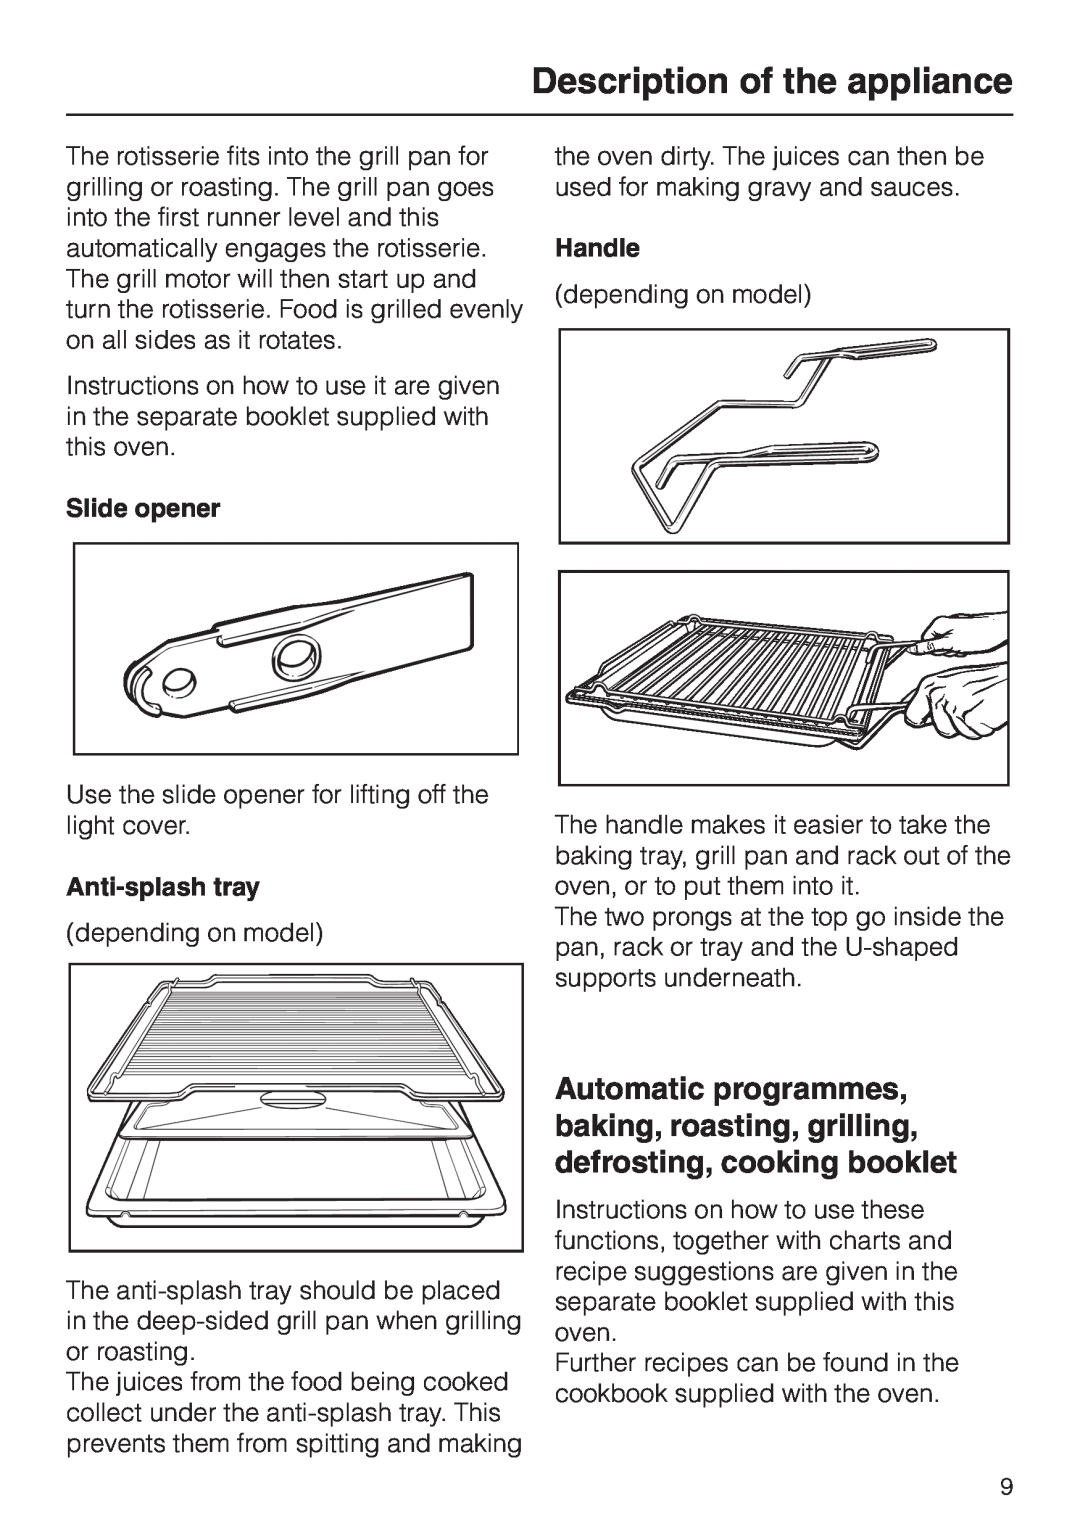 Miele H 4681 installation instructions Slide opener, Anti-splashtray, Handle, Description of the appliance 